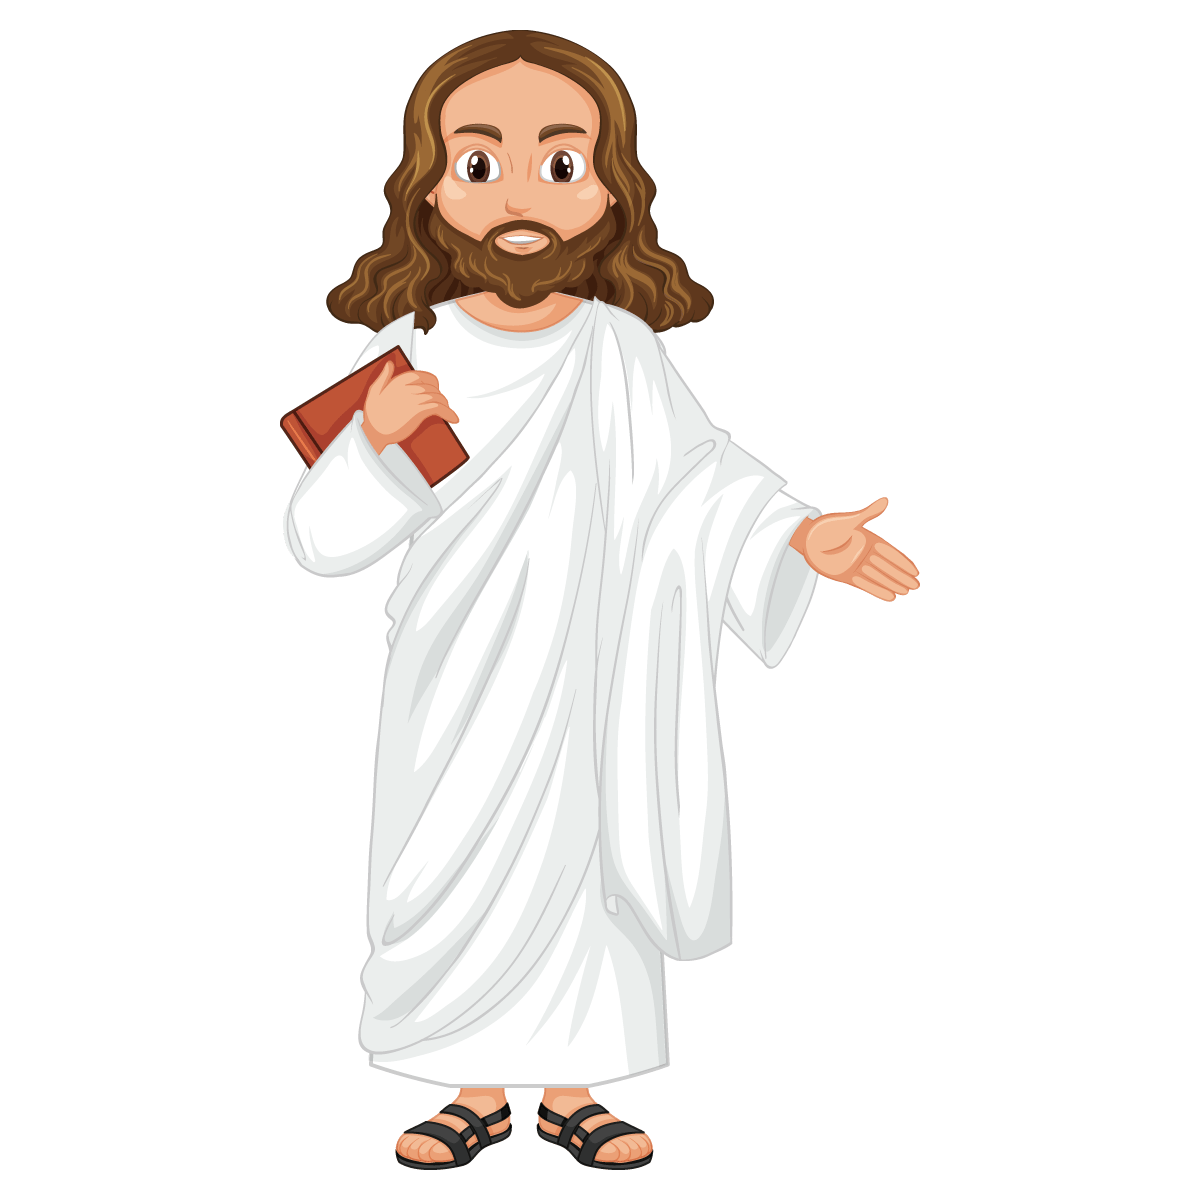 Jesus Cartoon PNG Transparent free hd image download